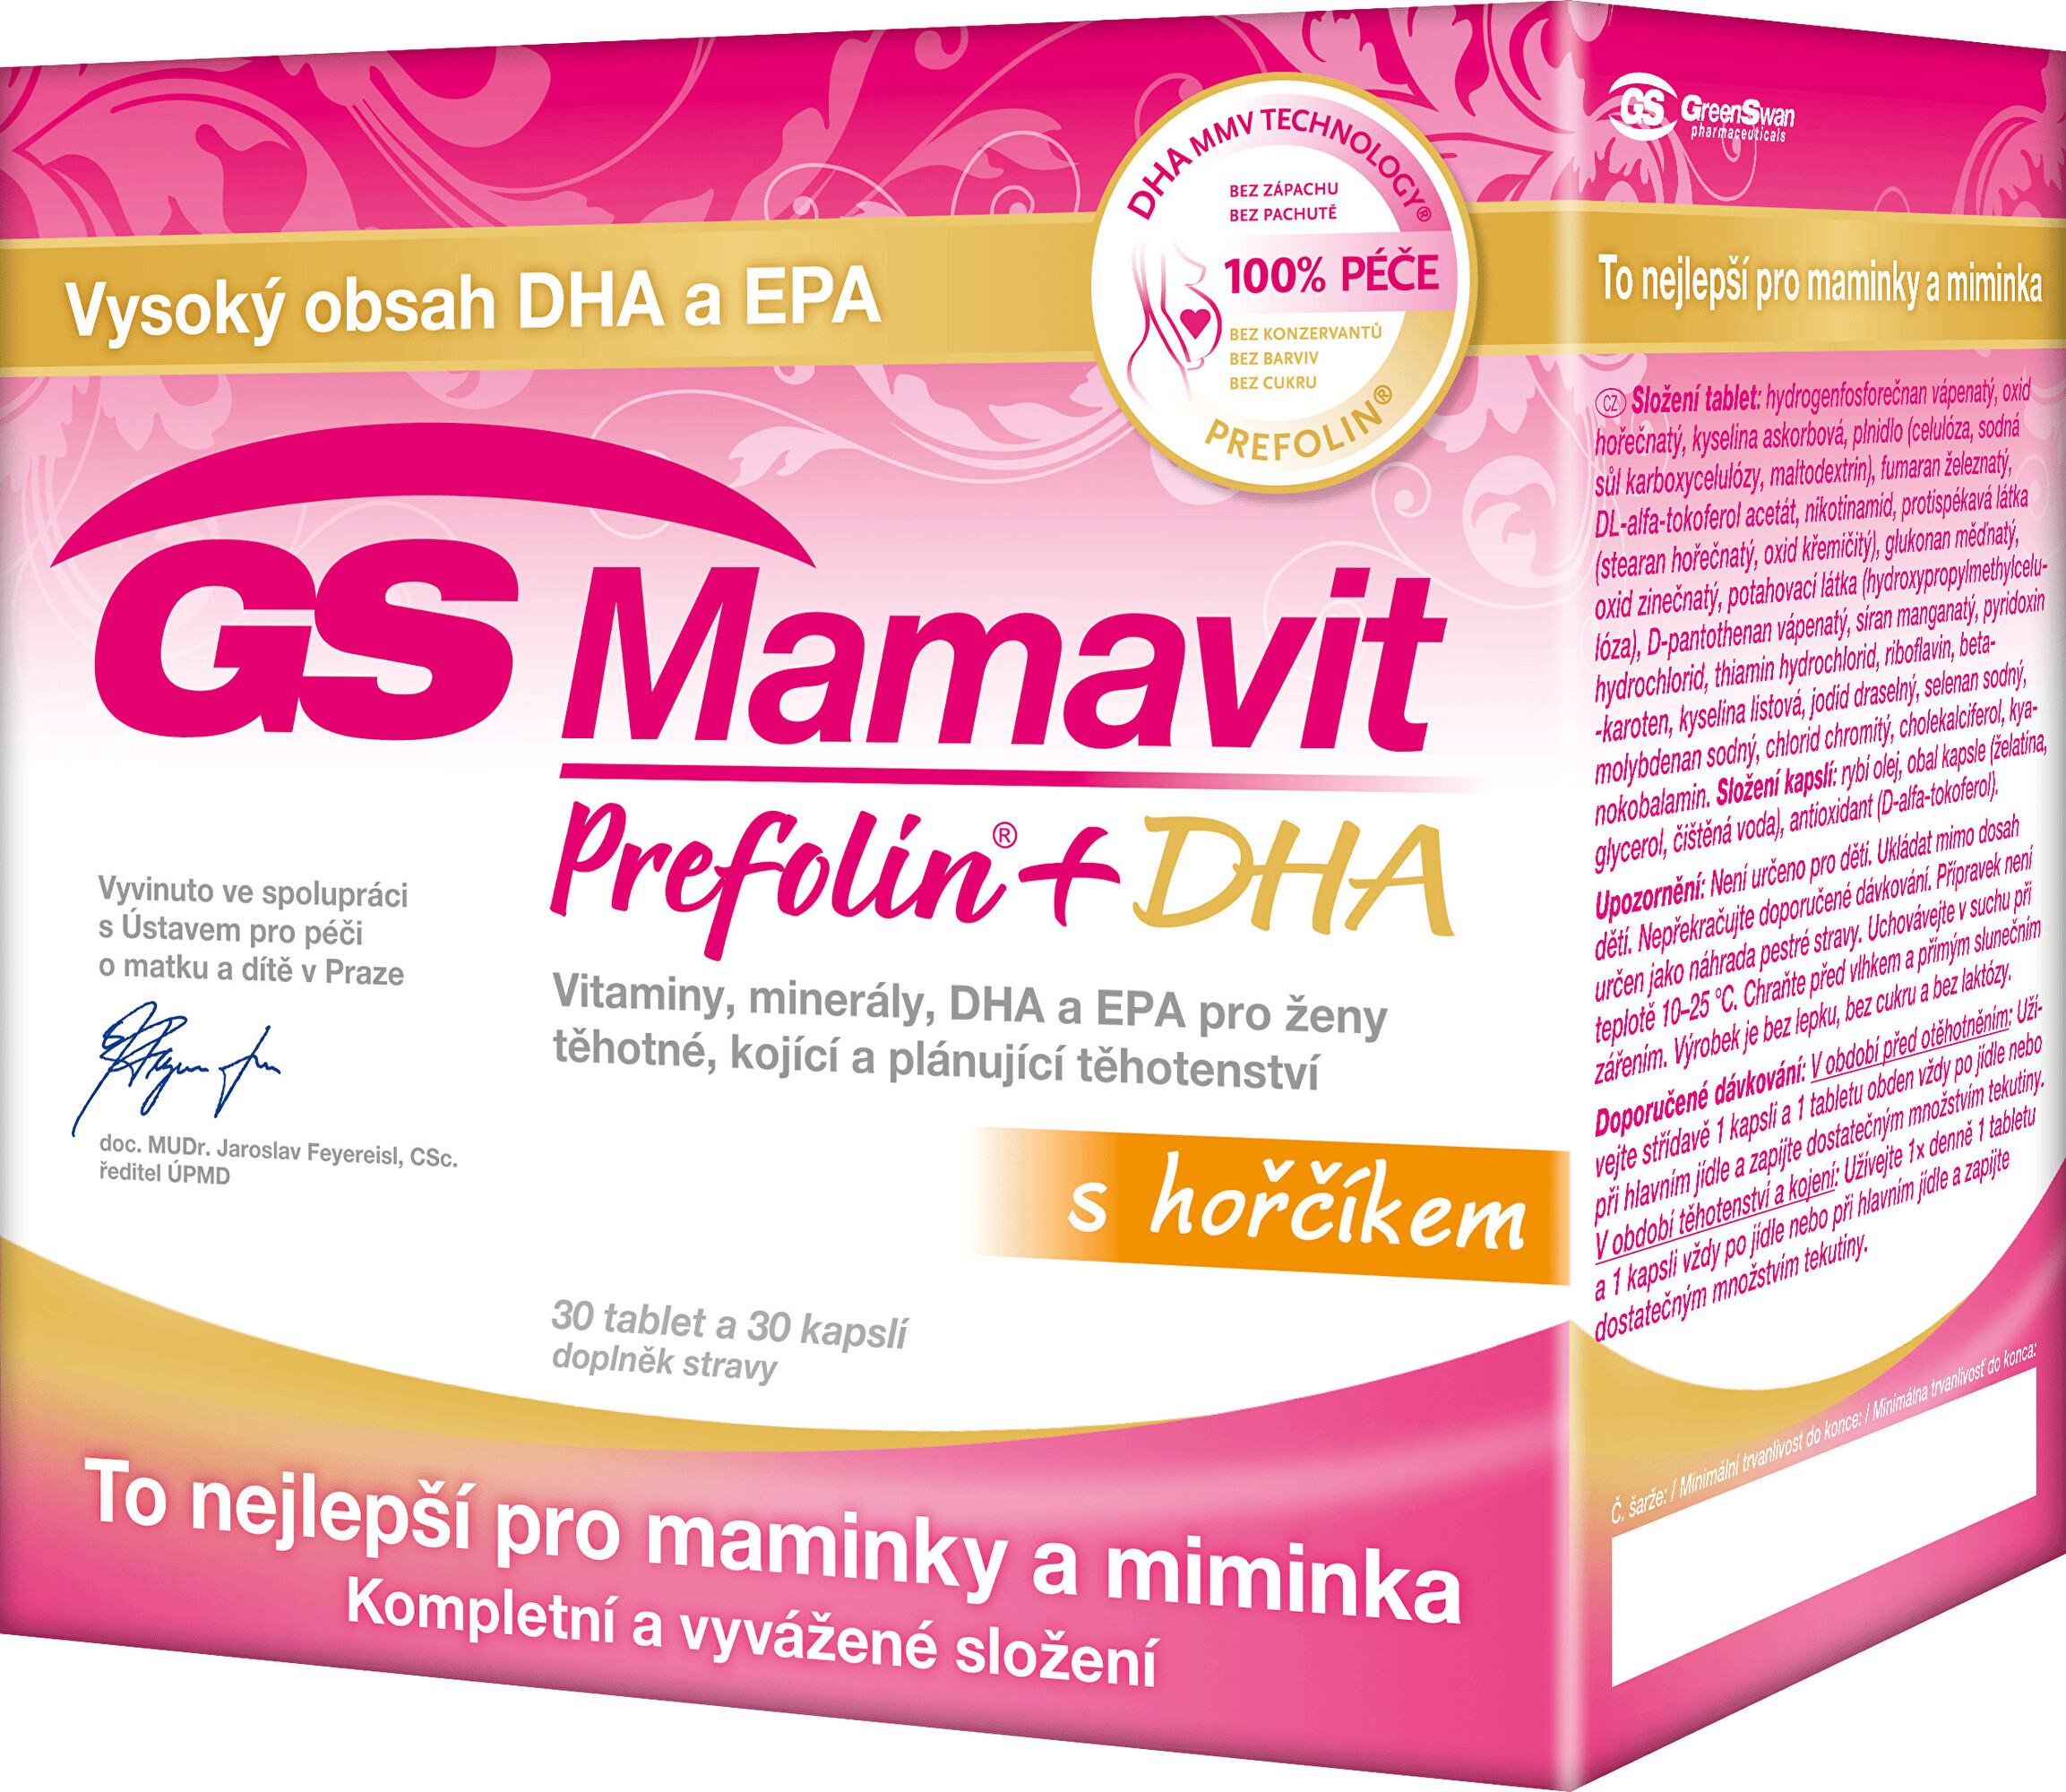 Zobrazit detail výrobku GreenSwan GS Mamavit Prefolin + DHA 30 tablet + 30 kapslí